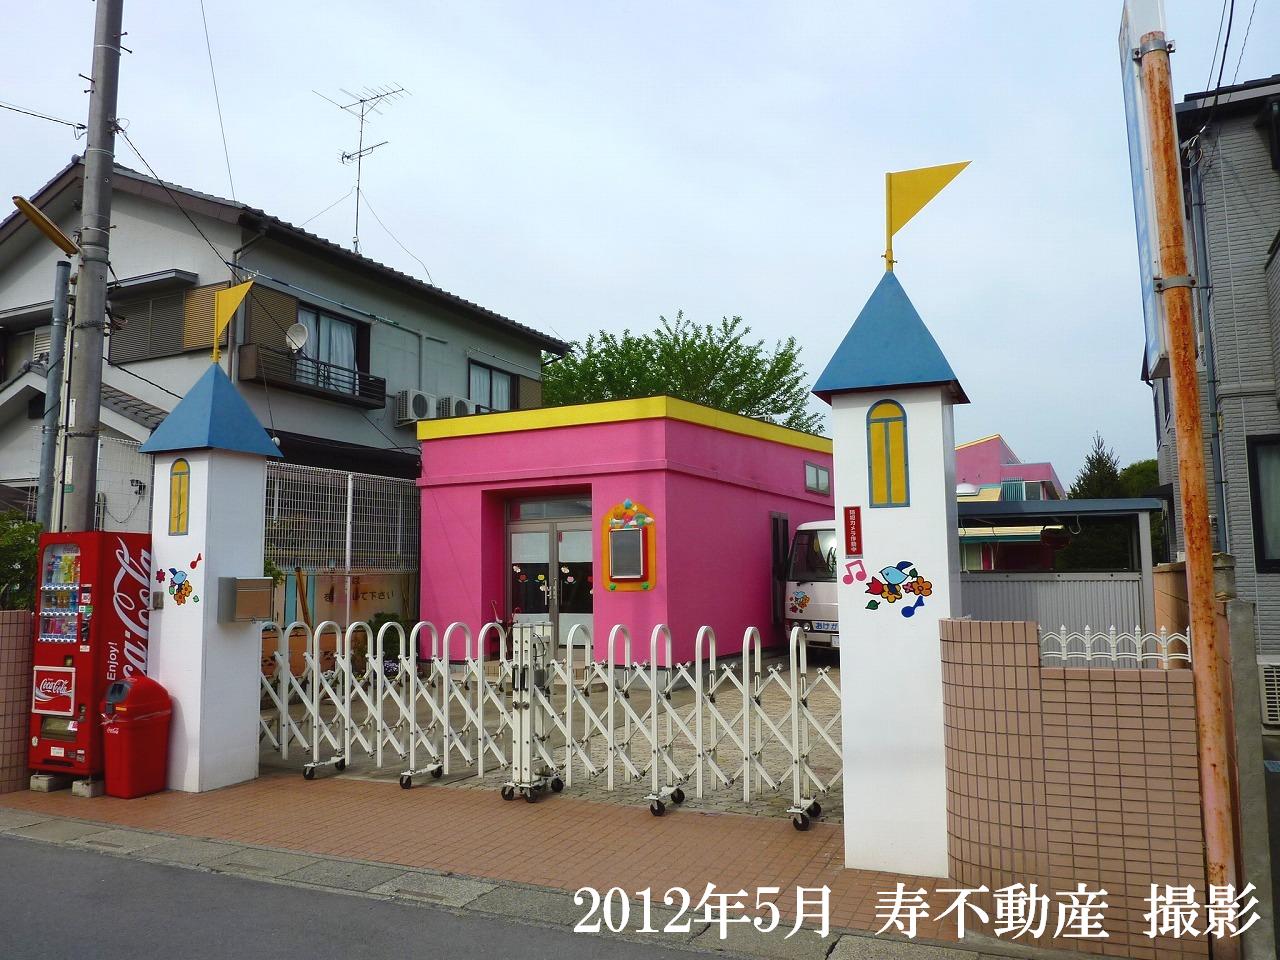 kindergarten ・ Nursery. Okeyo Doremi nursery school (kindergarten ・ 417m to the nursery)